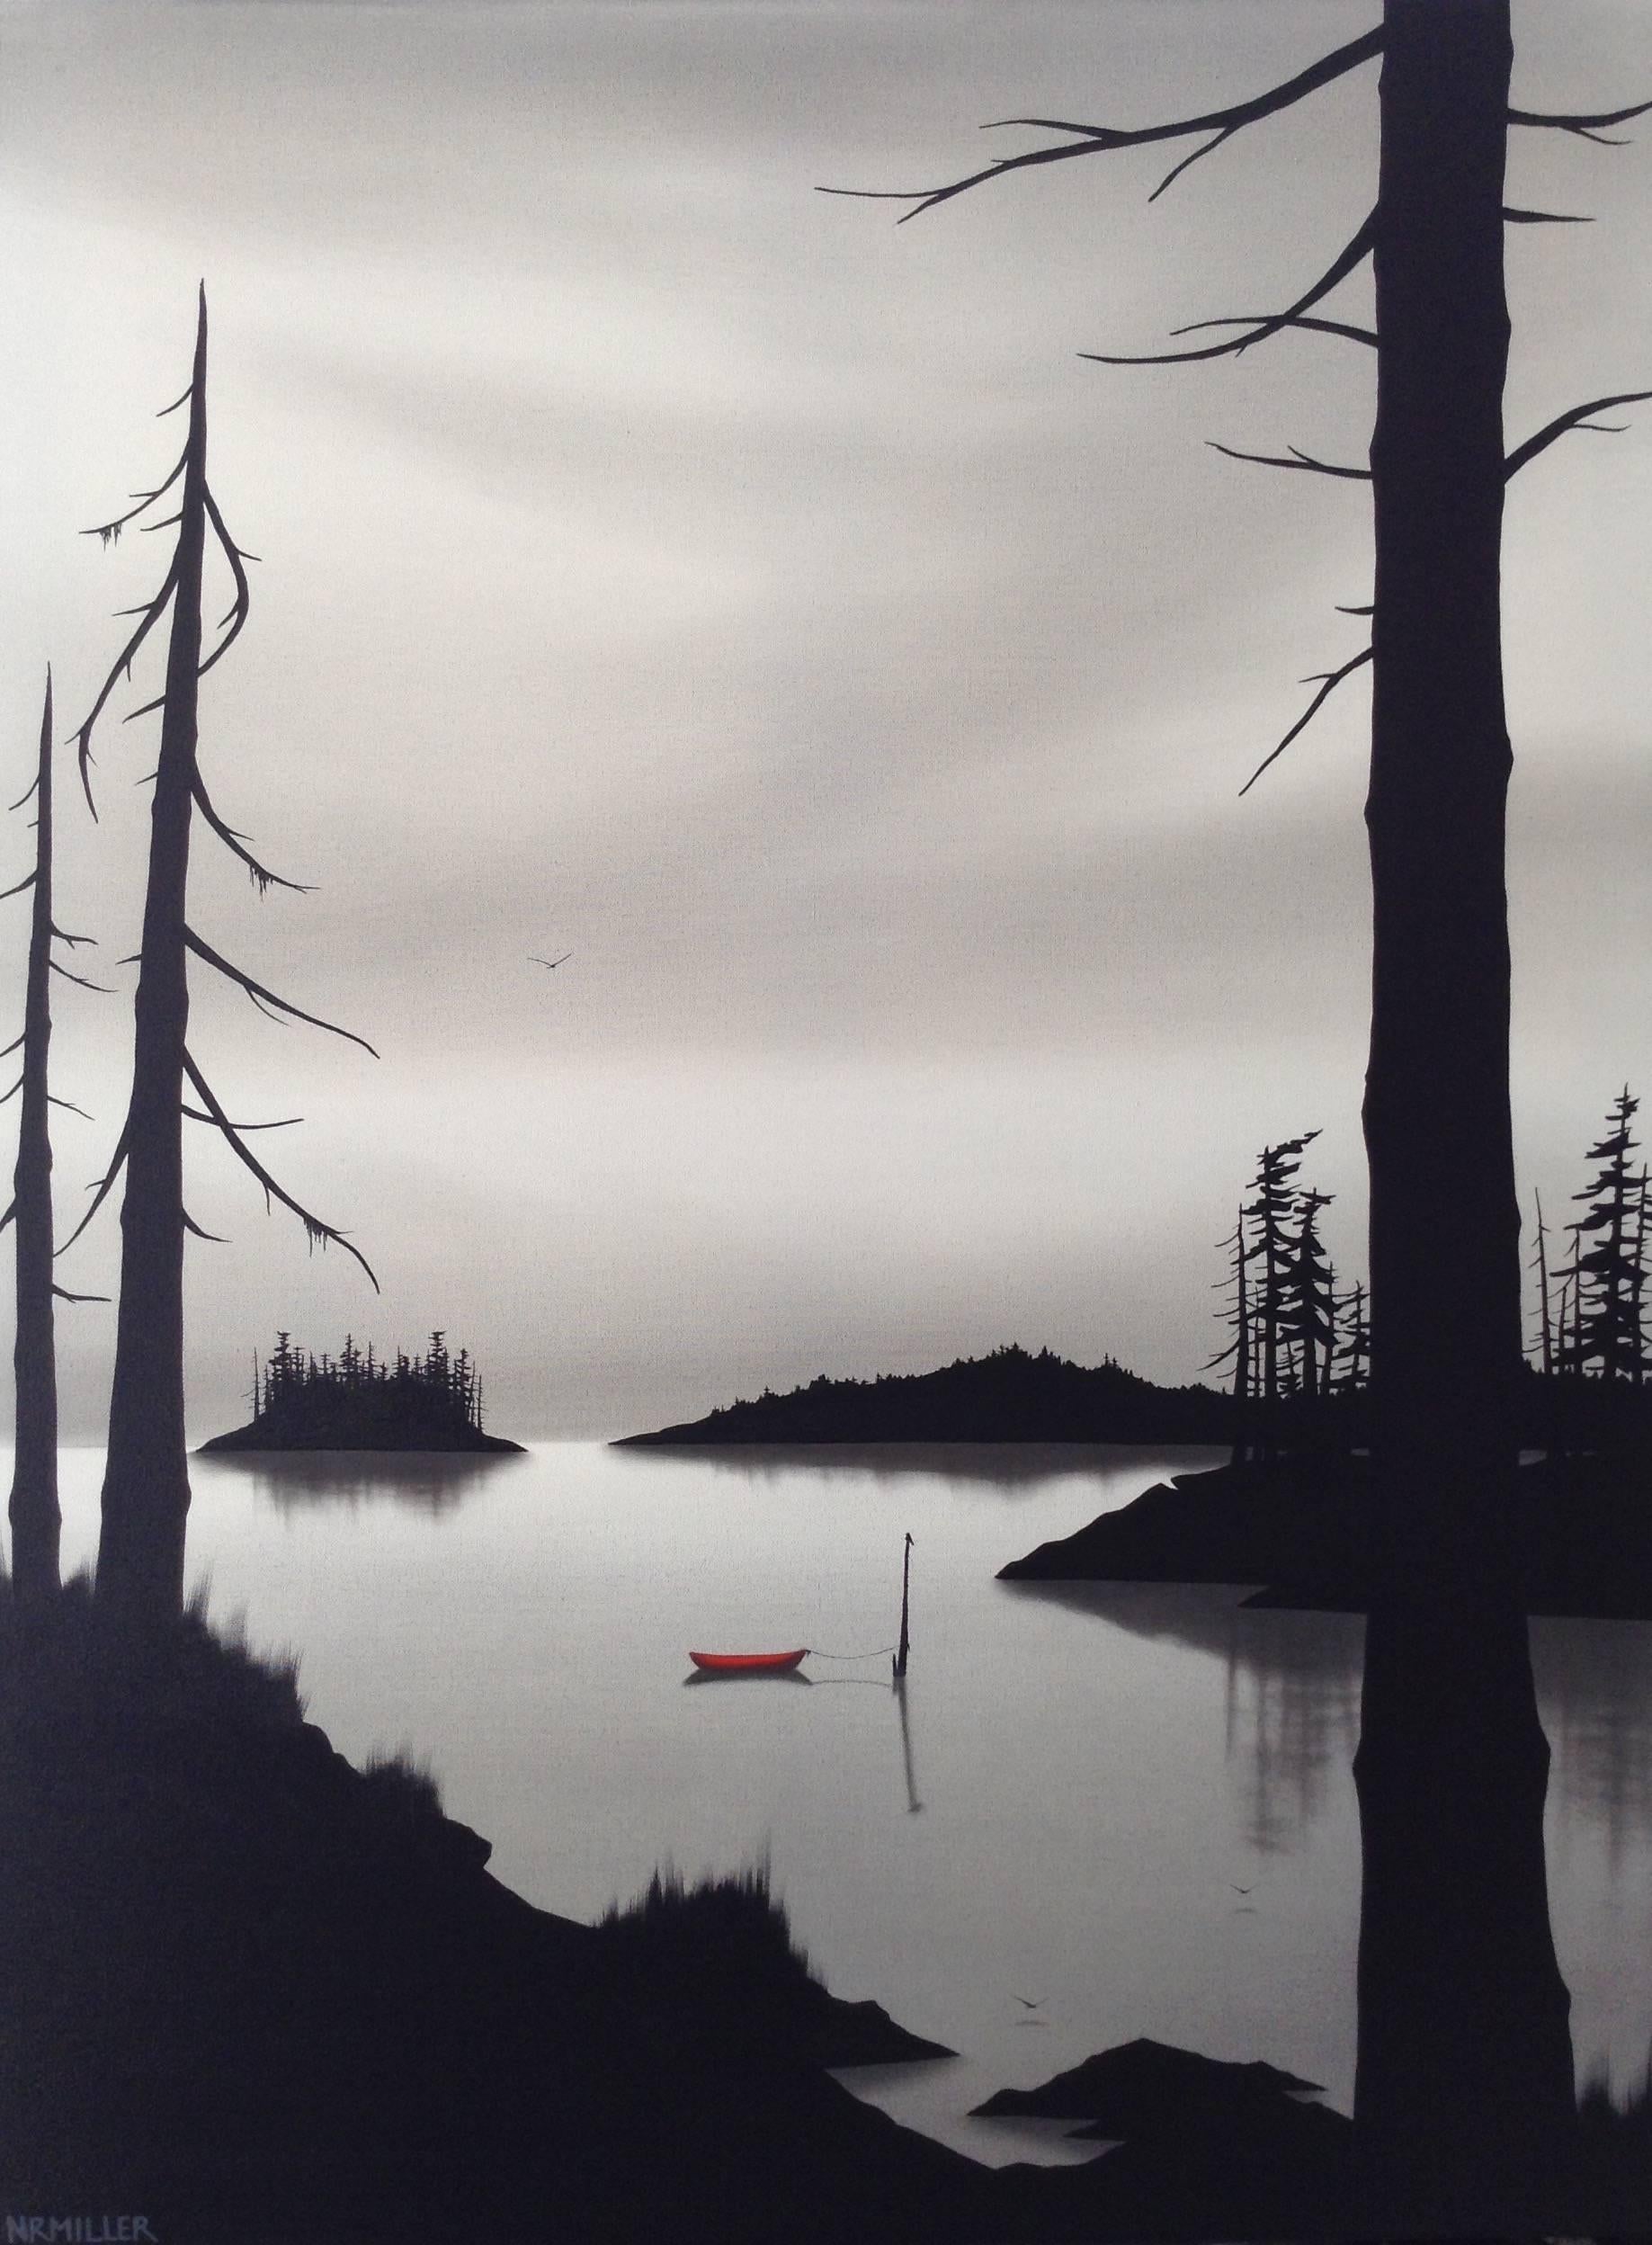 Landscape Painting Natasha Miller - "Cela aussi passera trop tard"